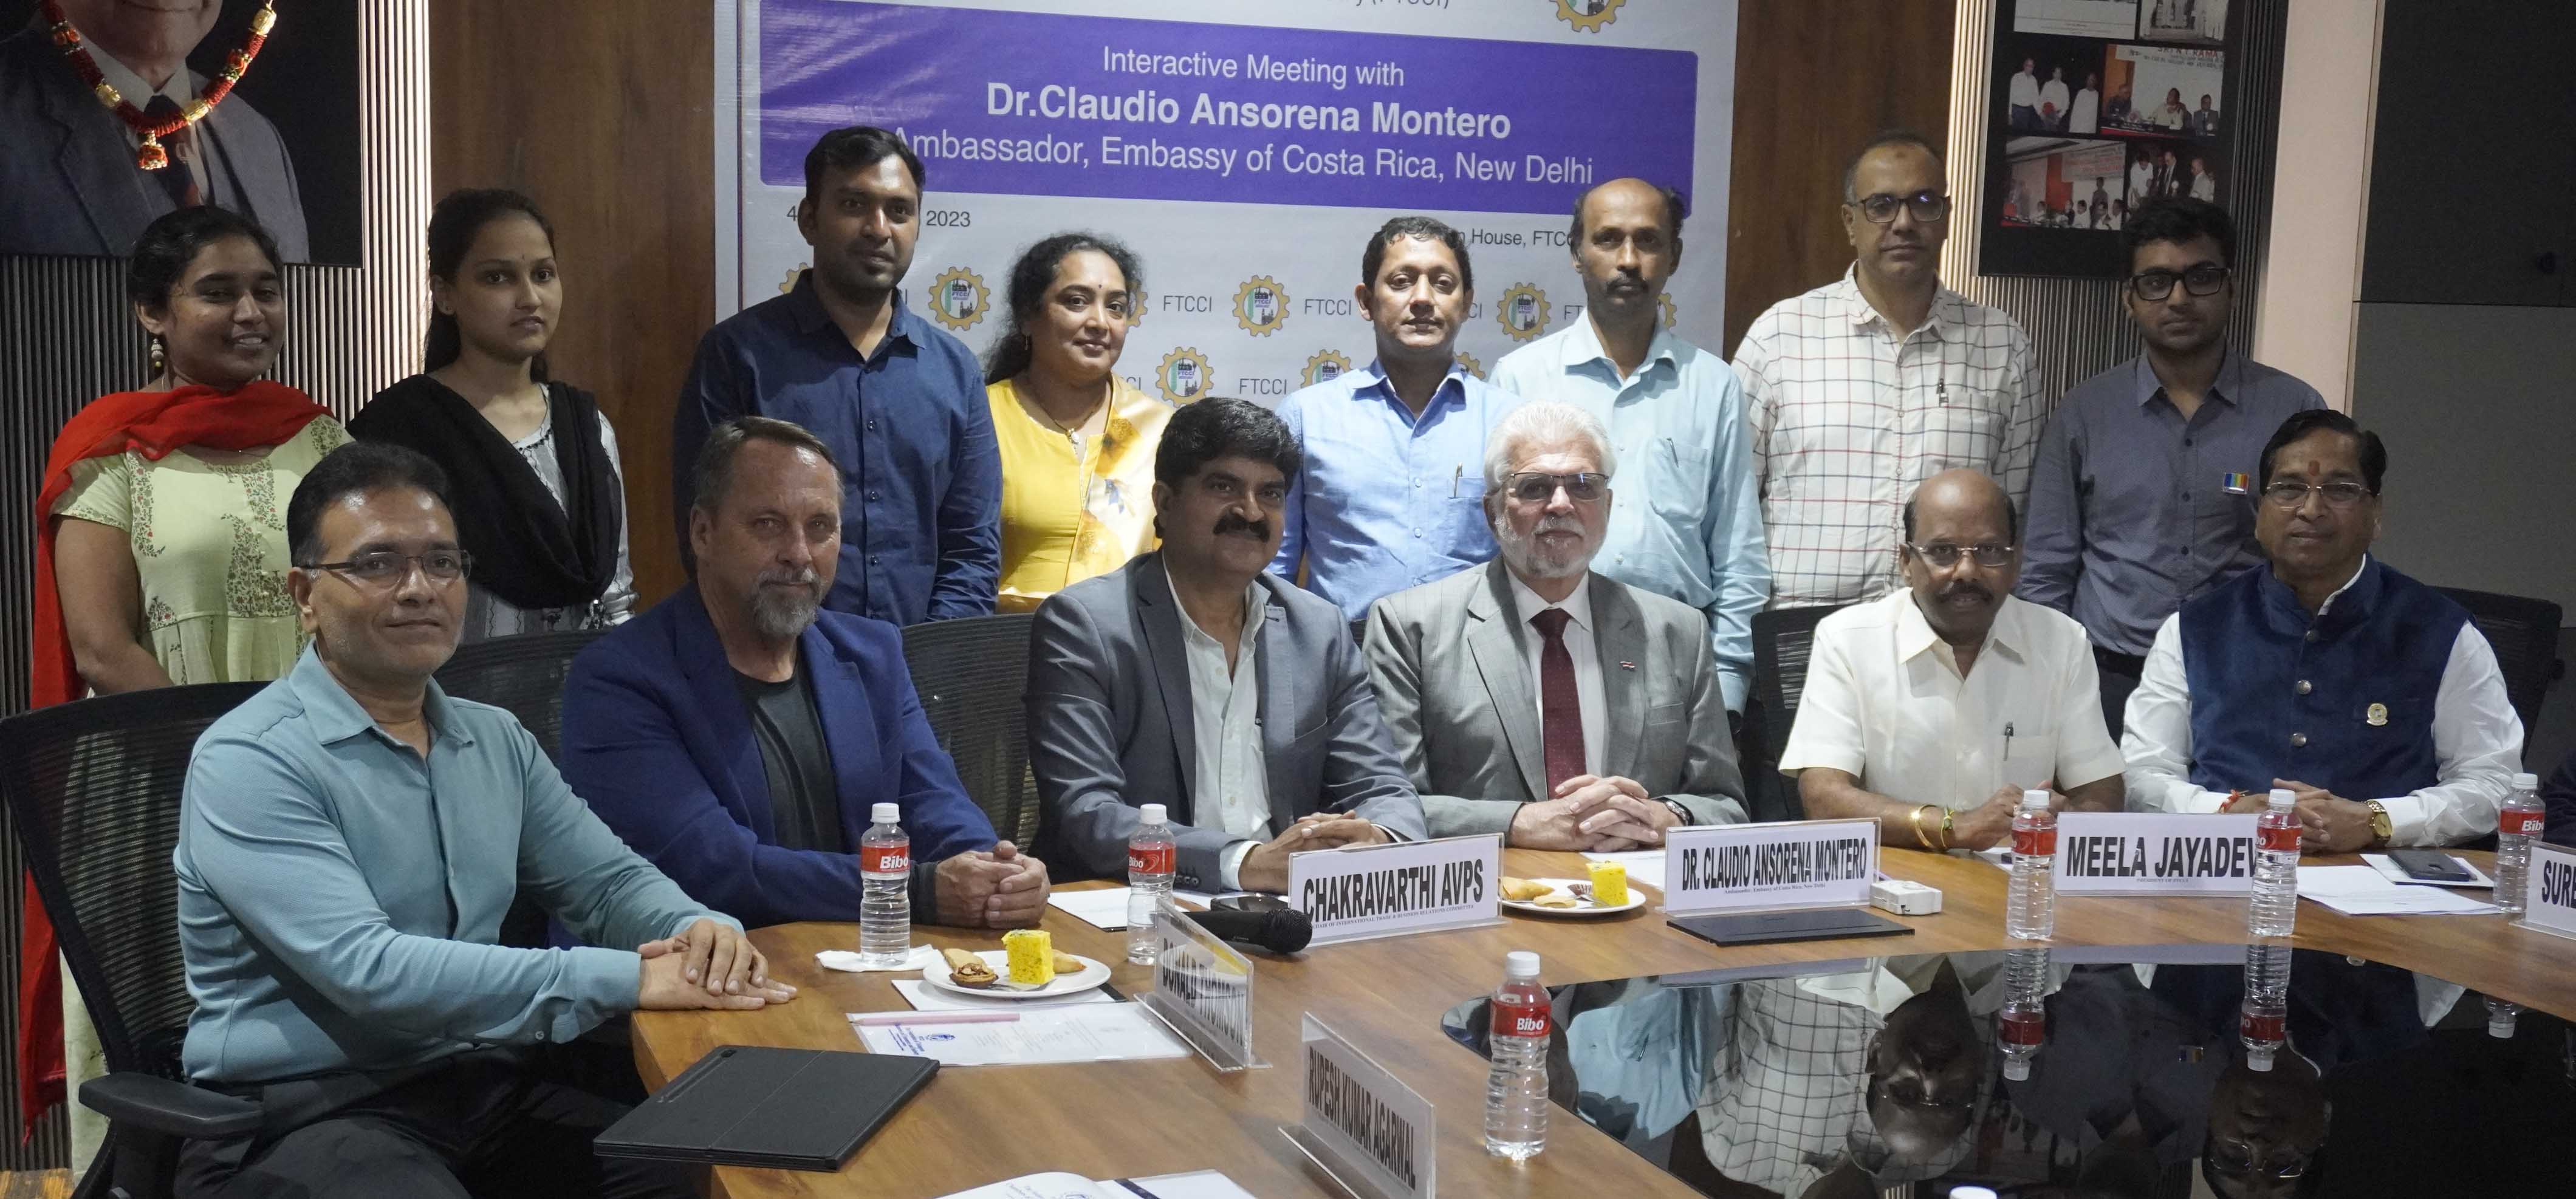 We Respect India's Efforts in Space Science: Ambassador of Costa Rica to India, Dr Claudio Ansorena Montero